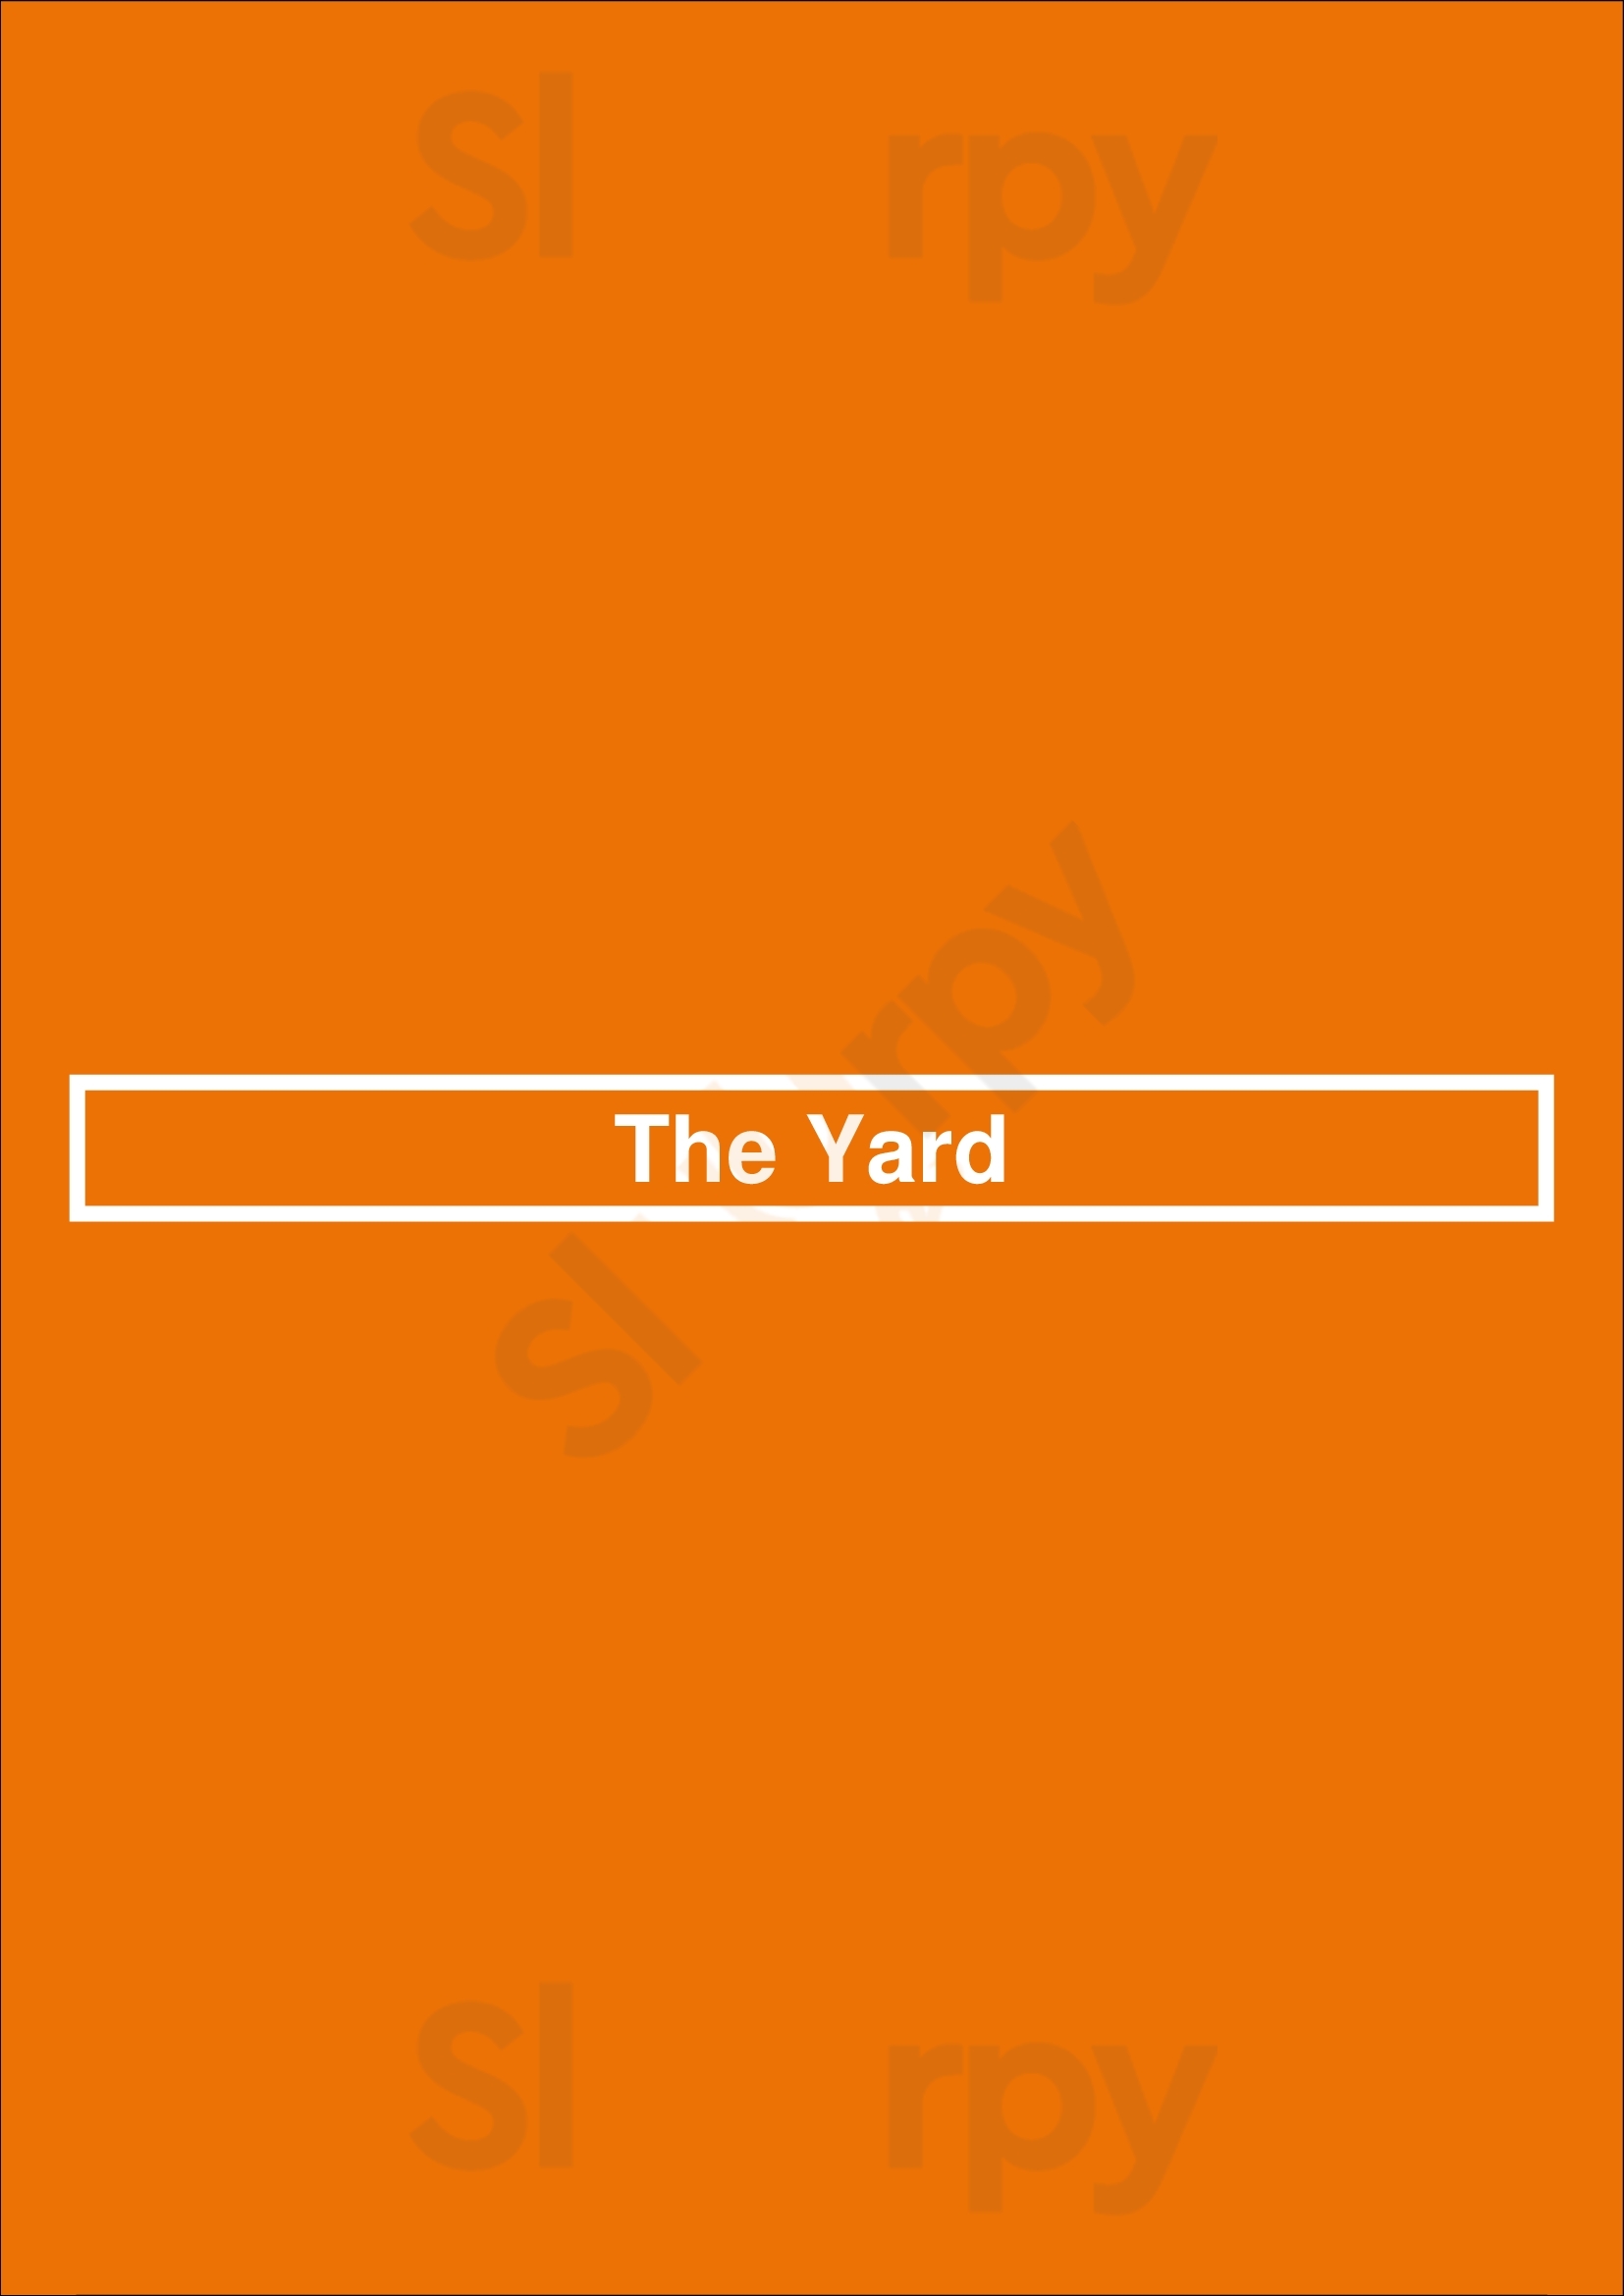 The Yard Pittsburgh Menu - 1